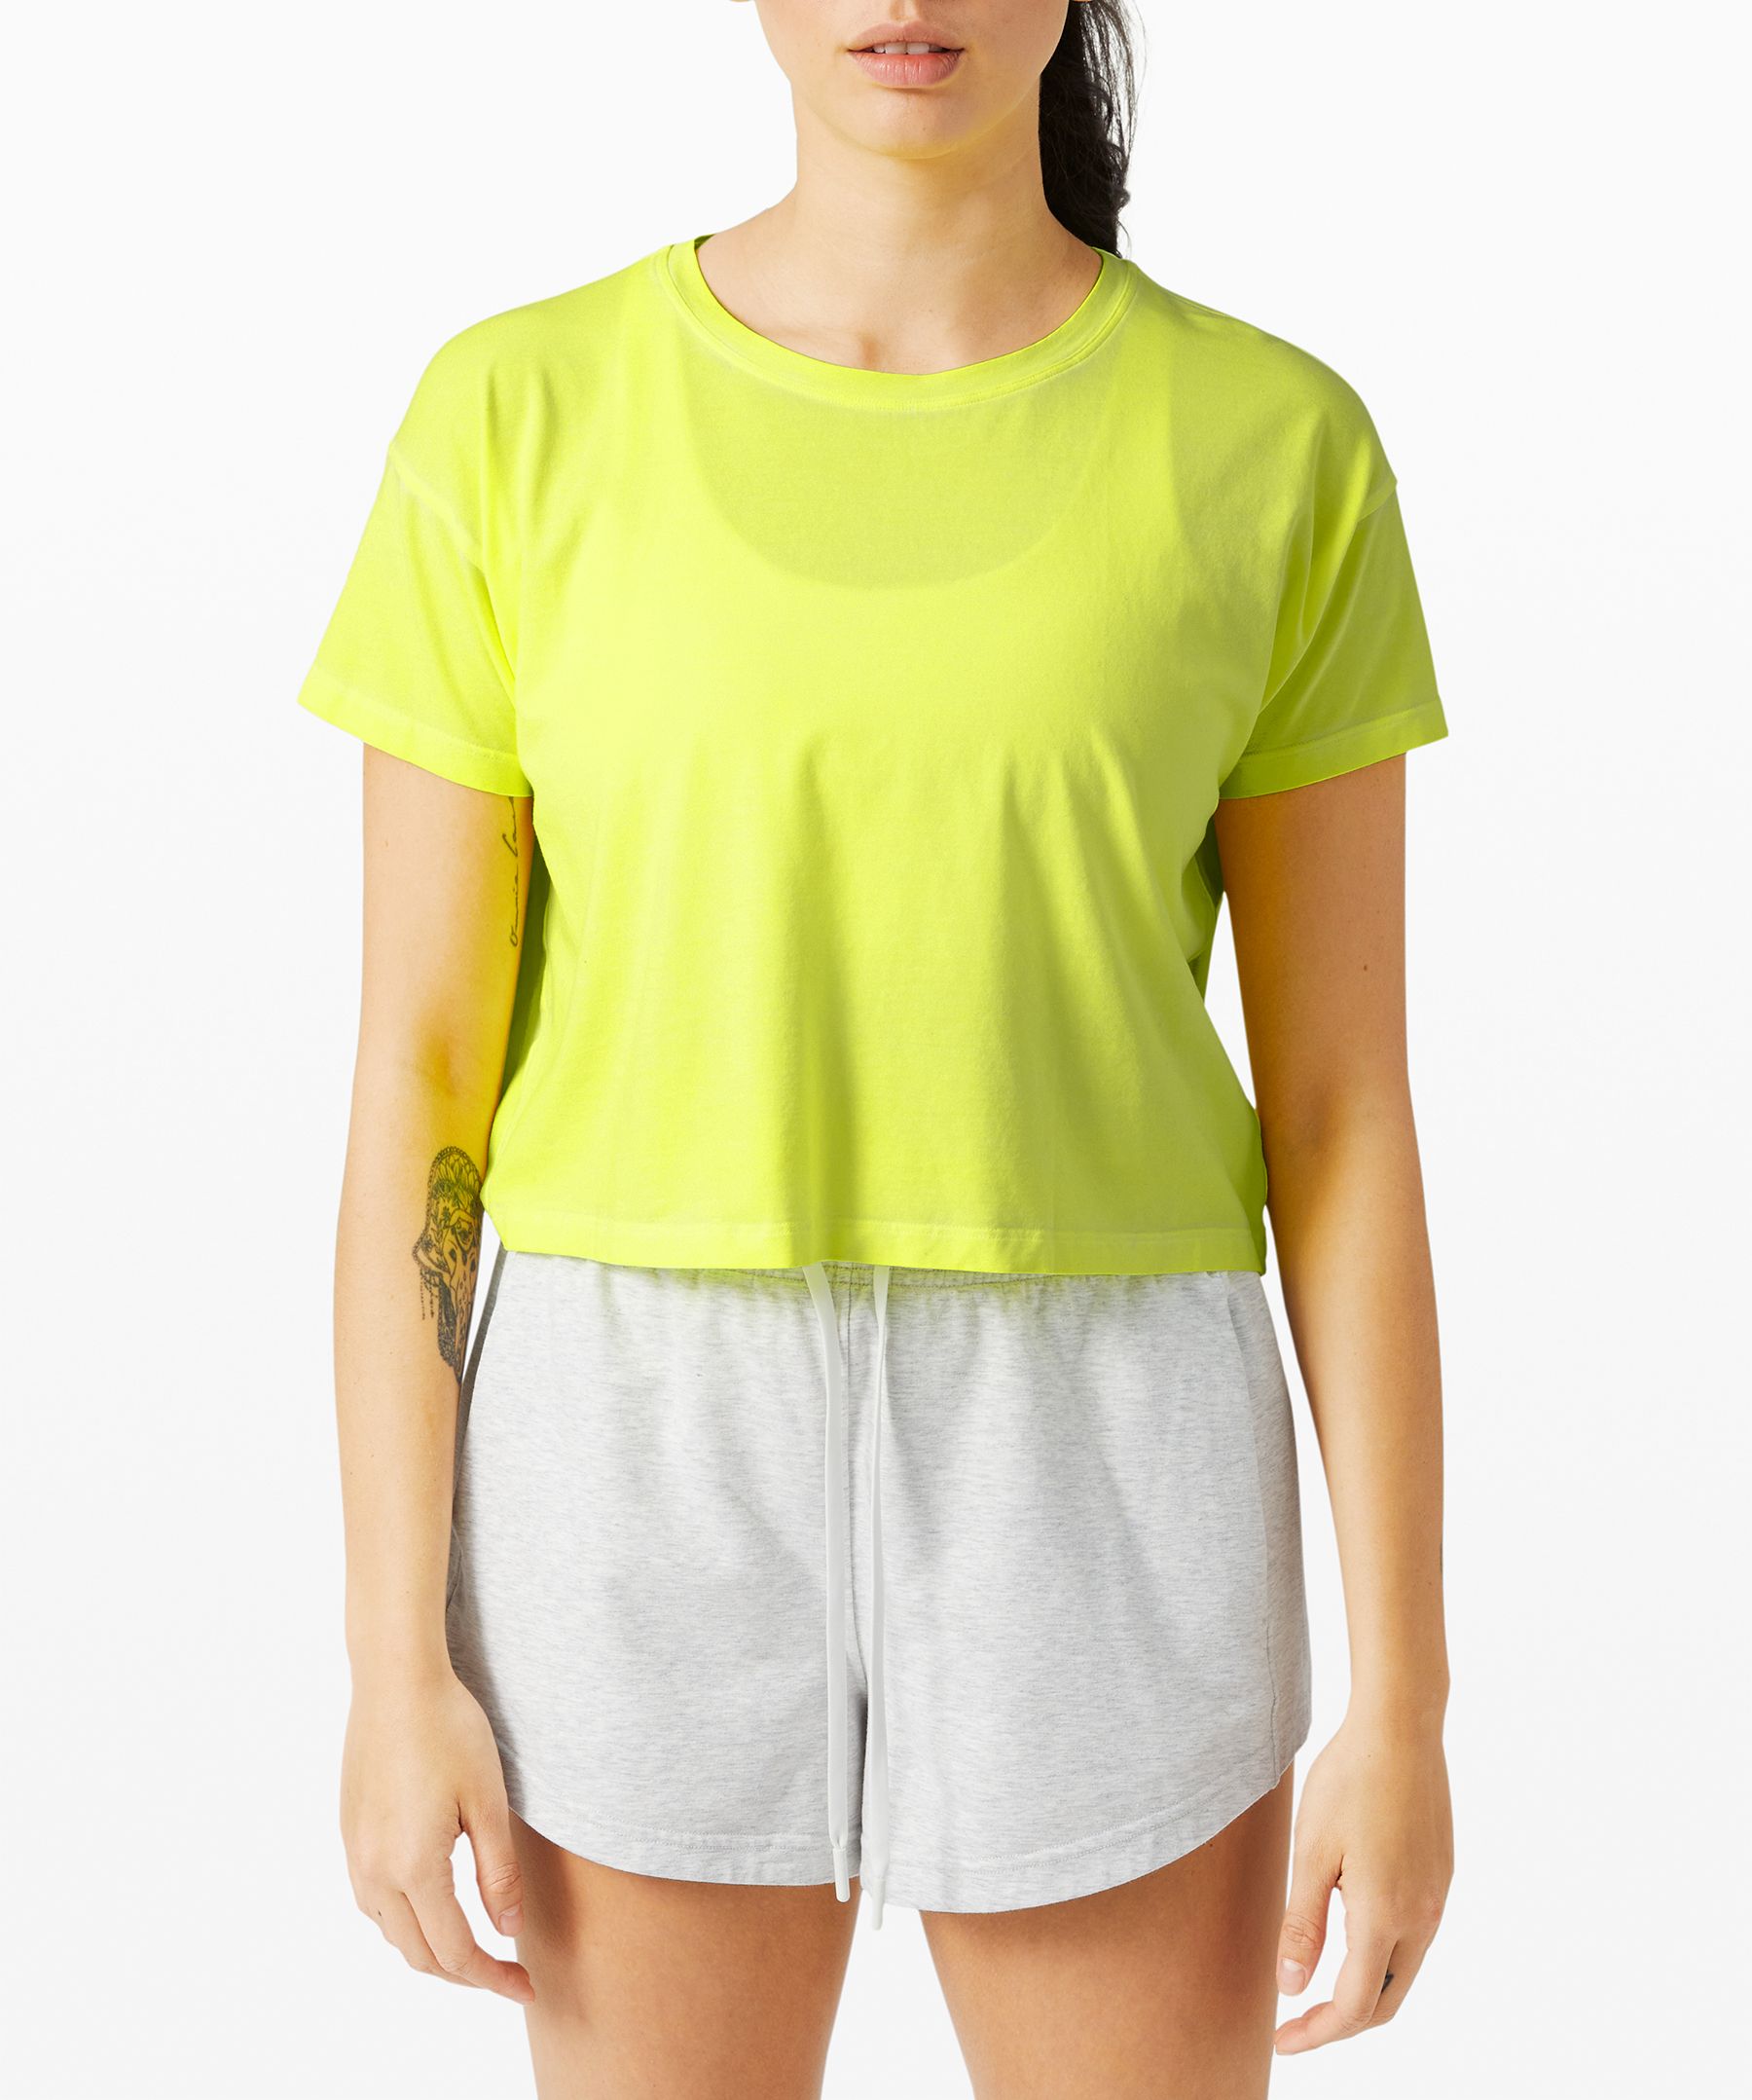 Lululemon Cates T-shirt In Sublimado Pigment Dye Highlight Yellow